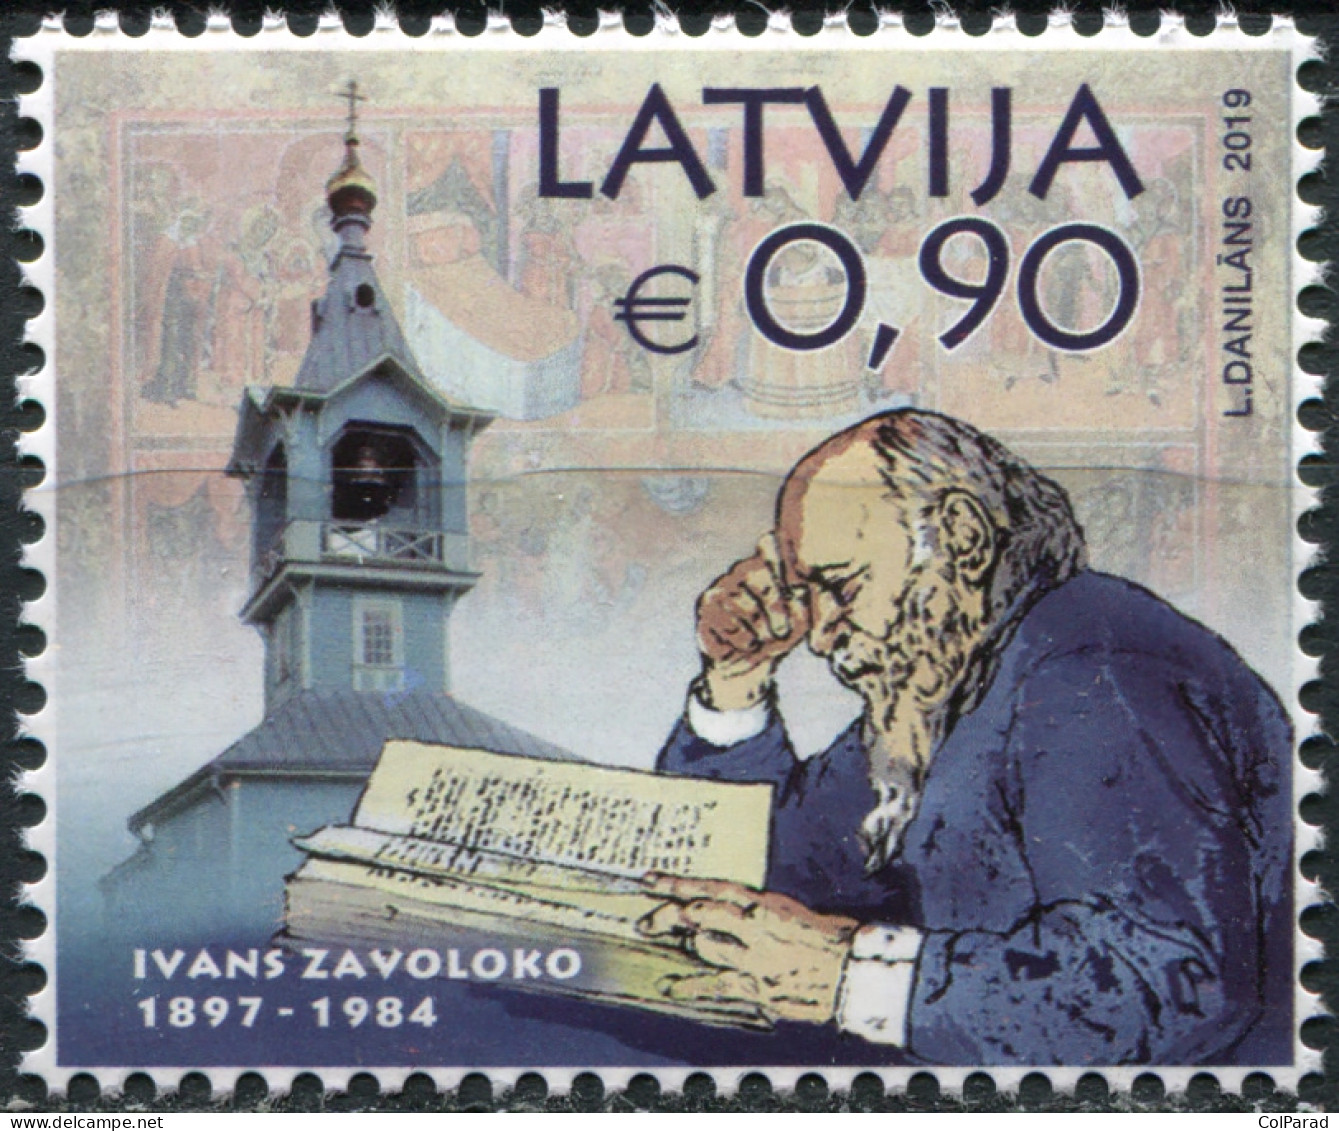 LATVIA - 2019 - STAMP MNH ** - Ivan Zavoloko, Historian Of Old Believers - Letland